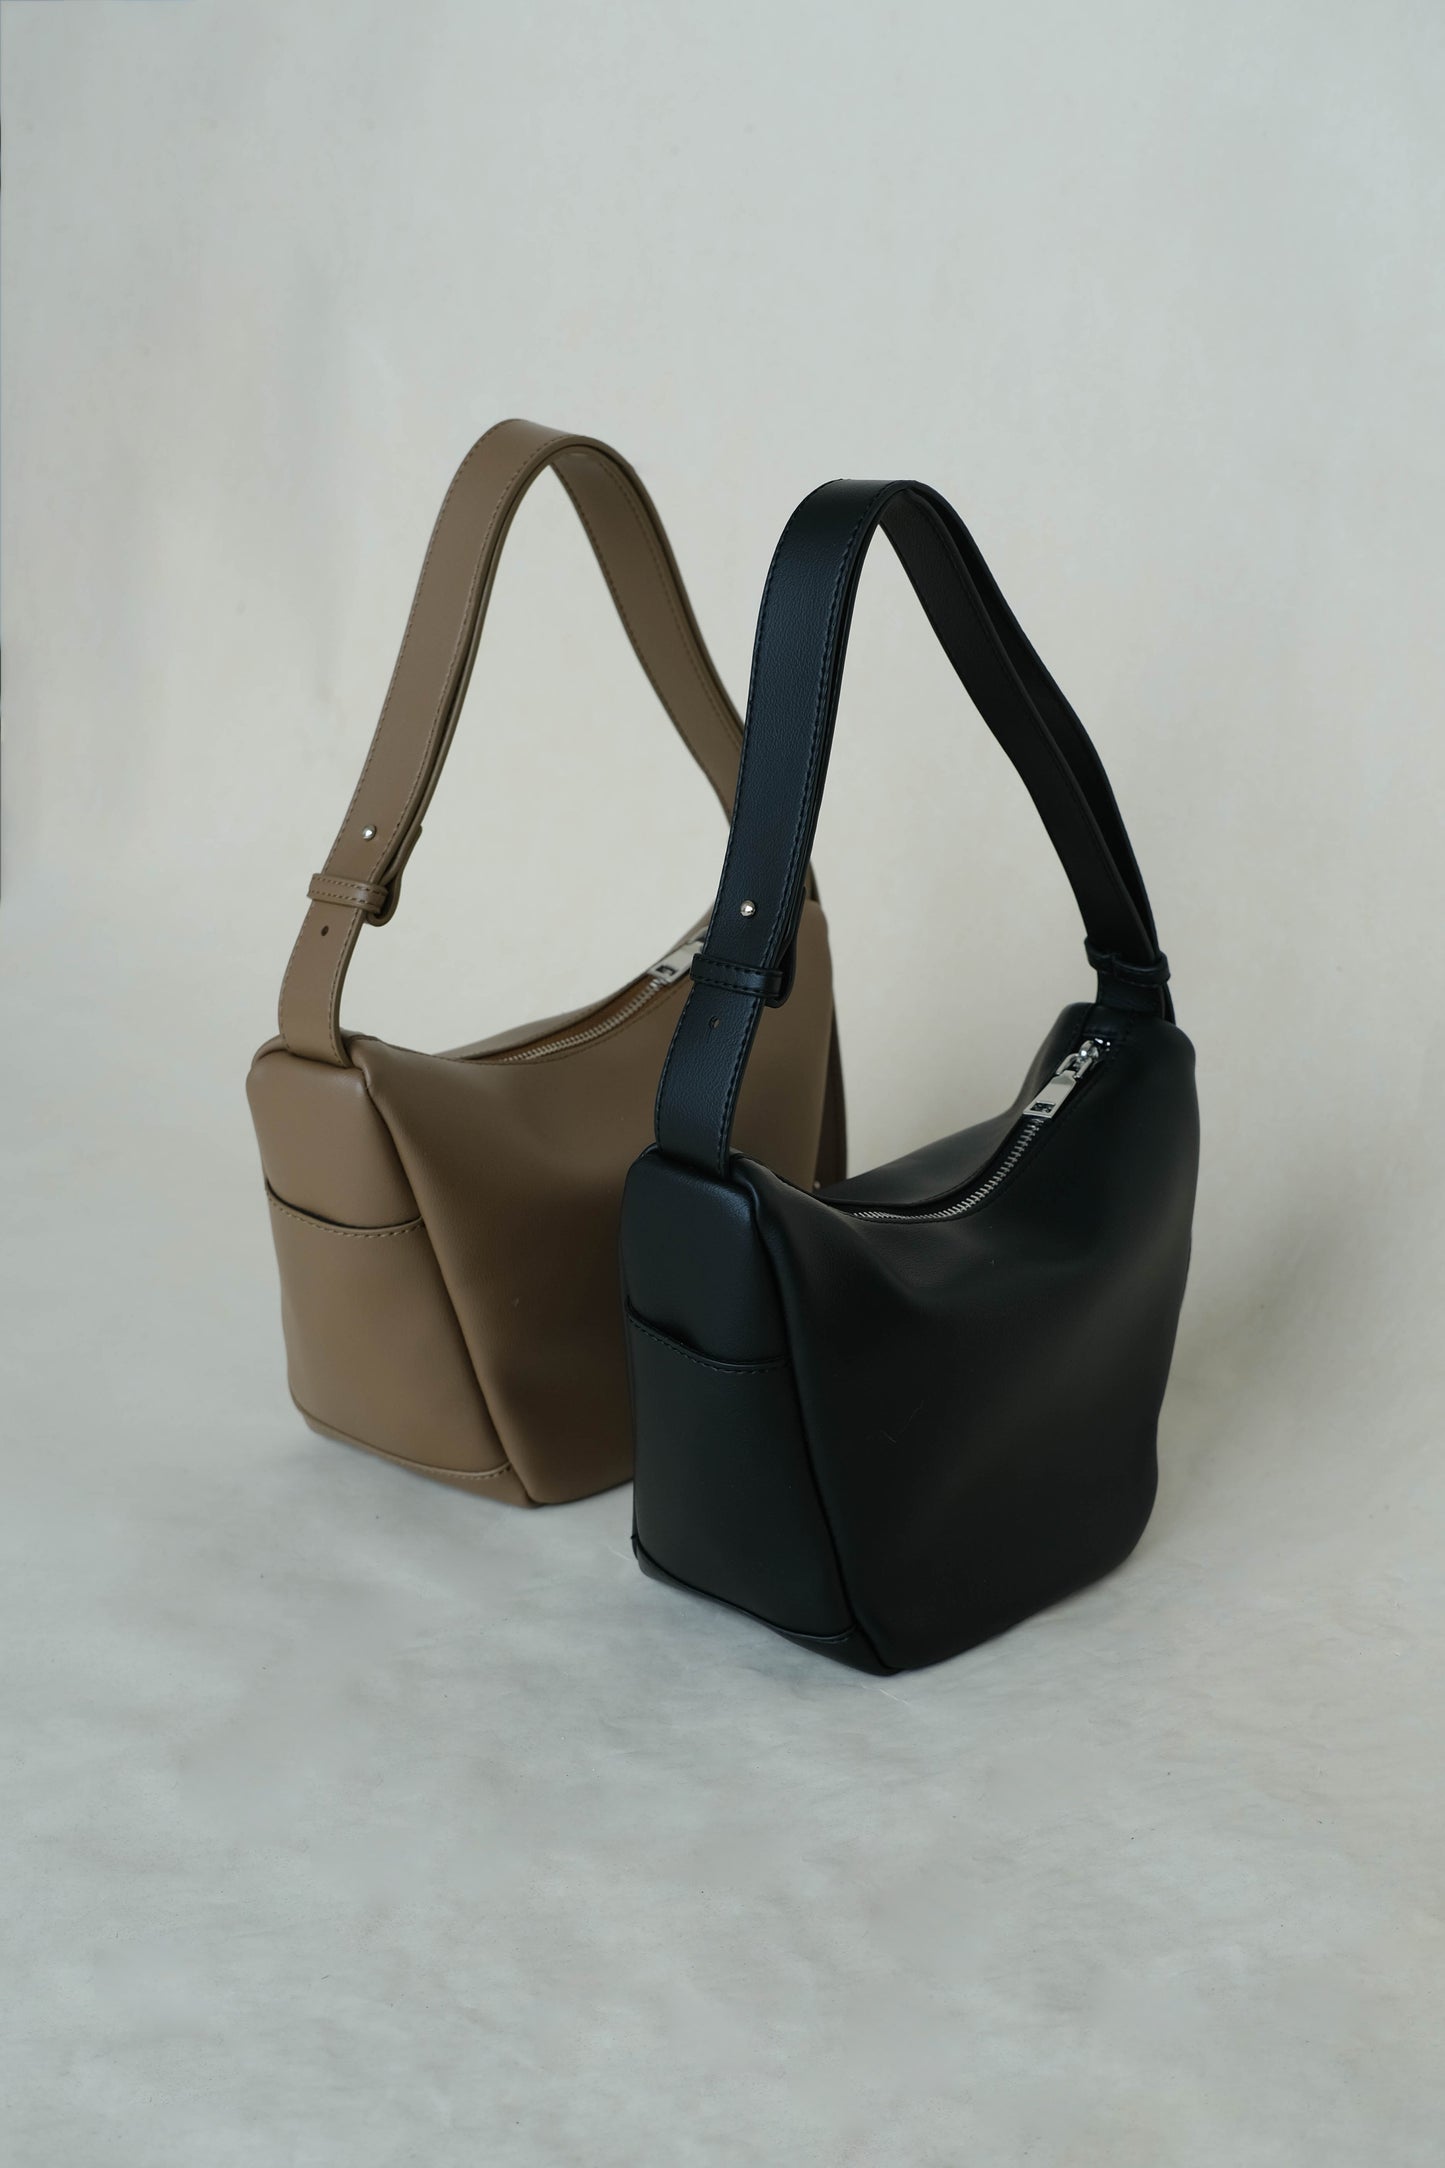 Supple leather axilla single-strap bag in mud color